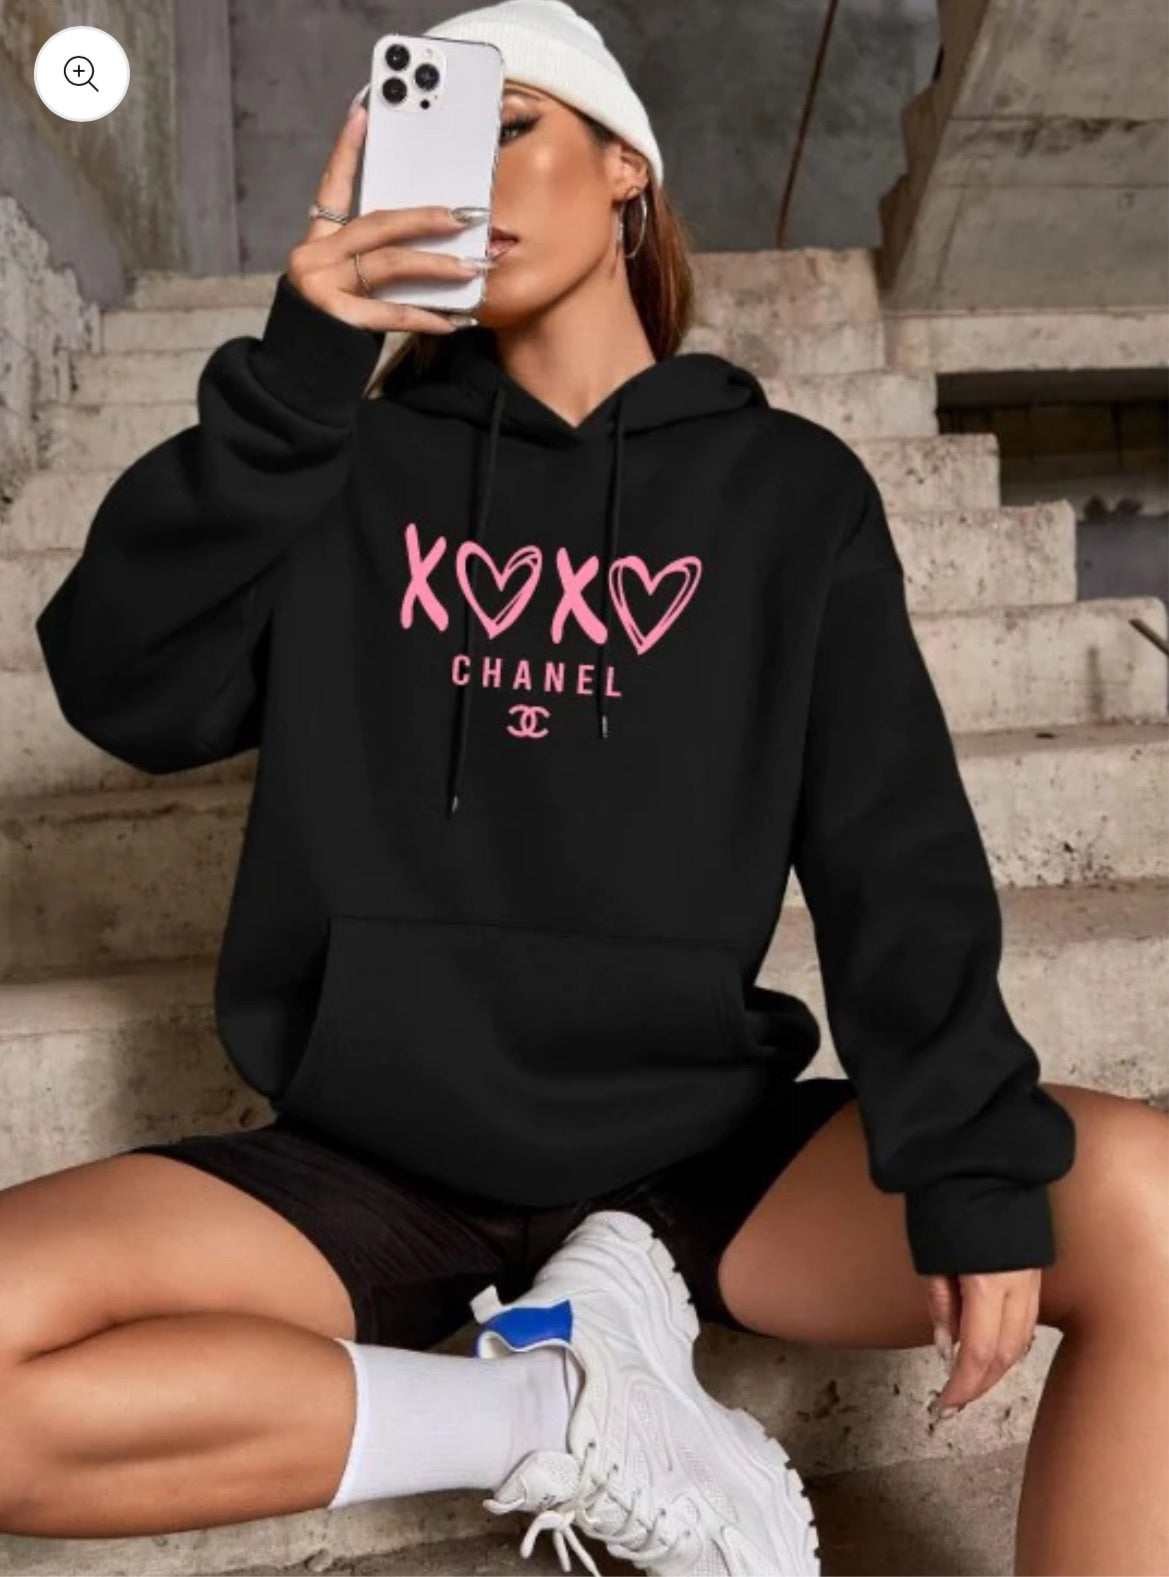 Xoxo - black and pink hoodie